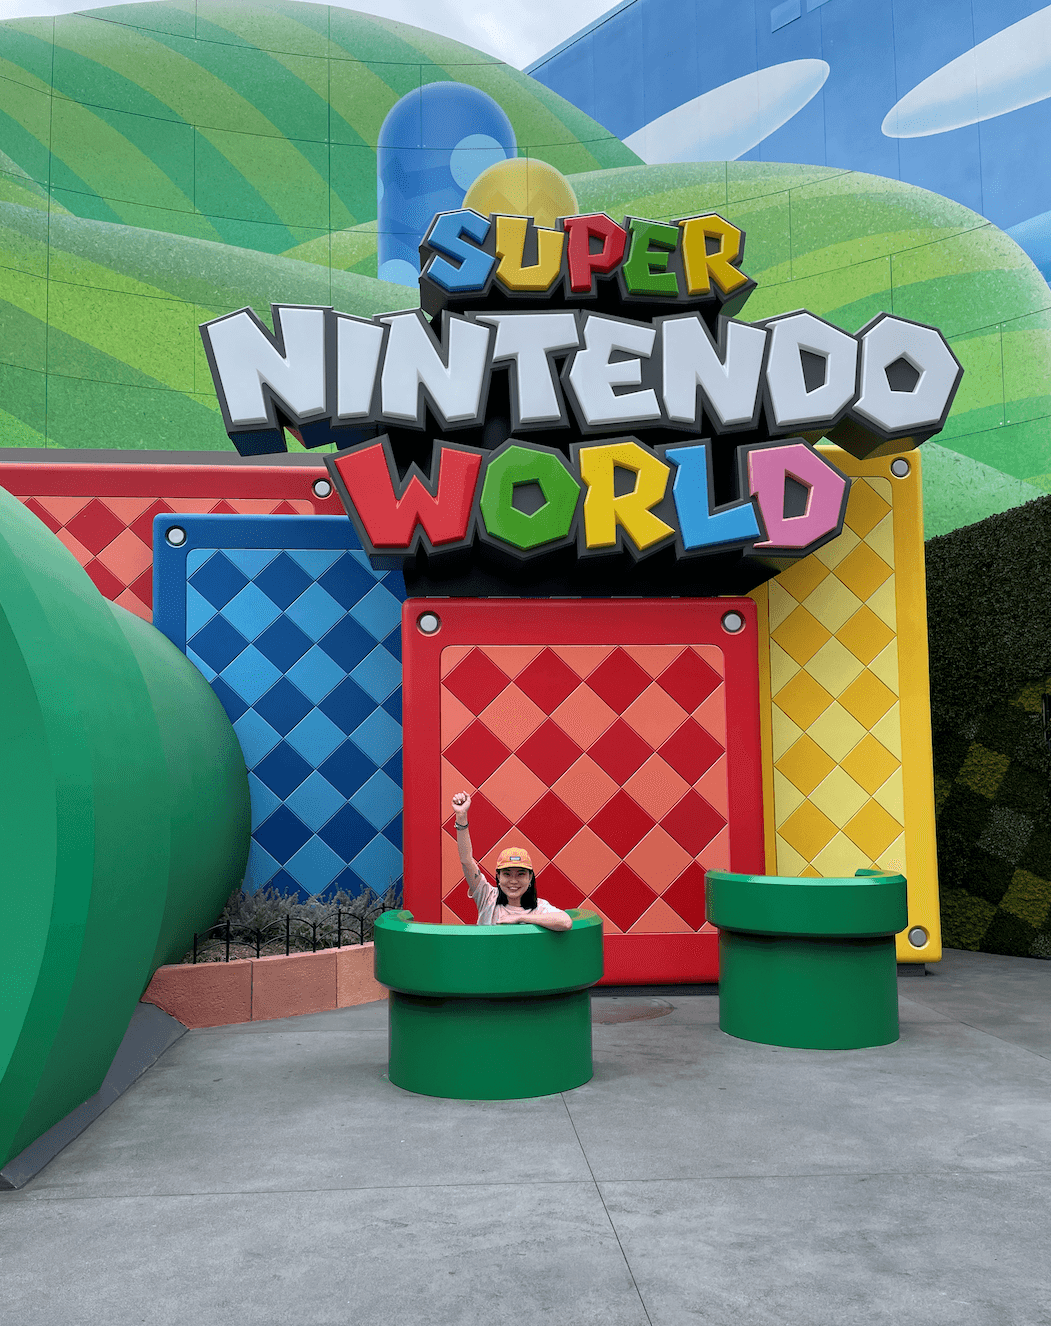 好萊塢環球影城Universal Studios Hollywood 
超級任天堂 Super Nintendo World